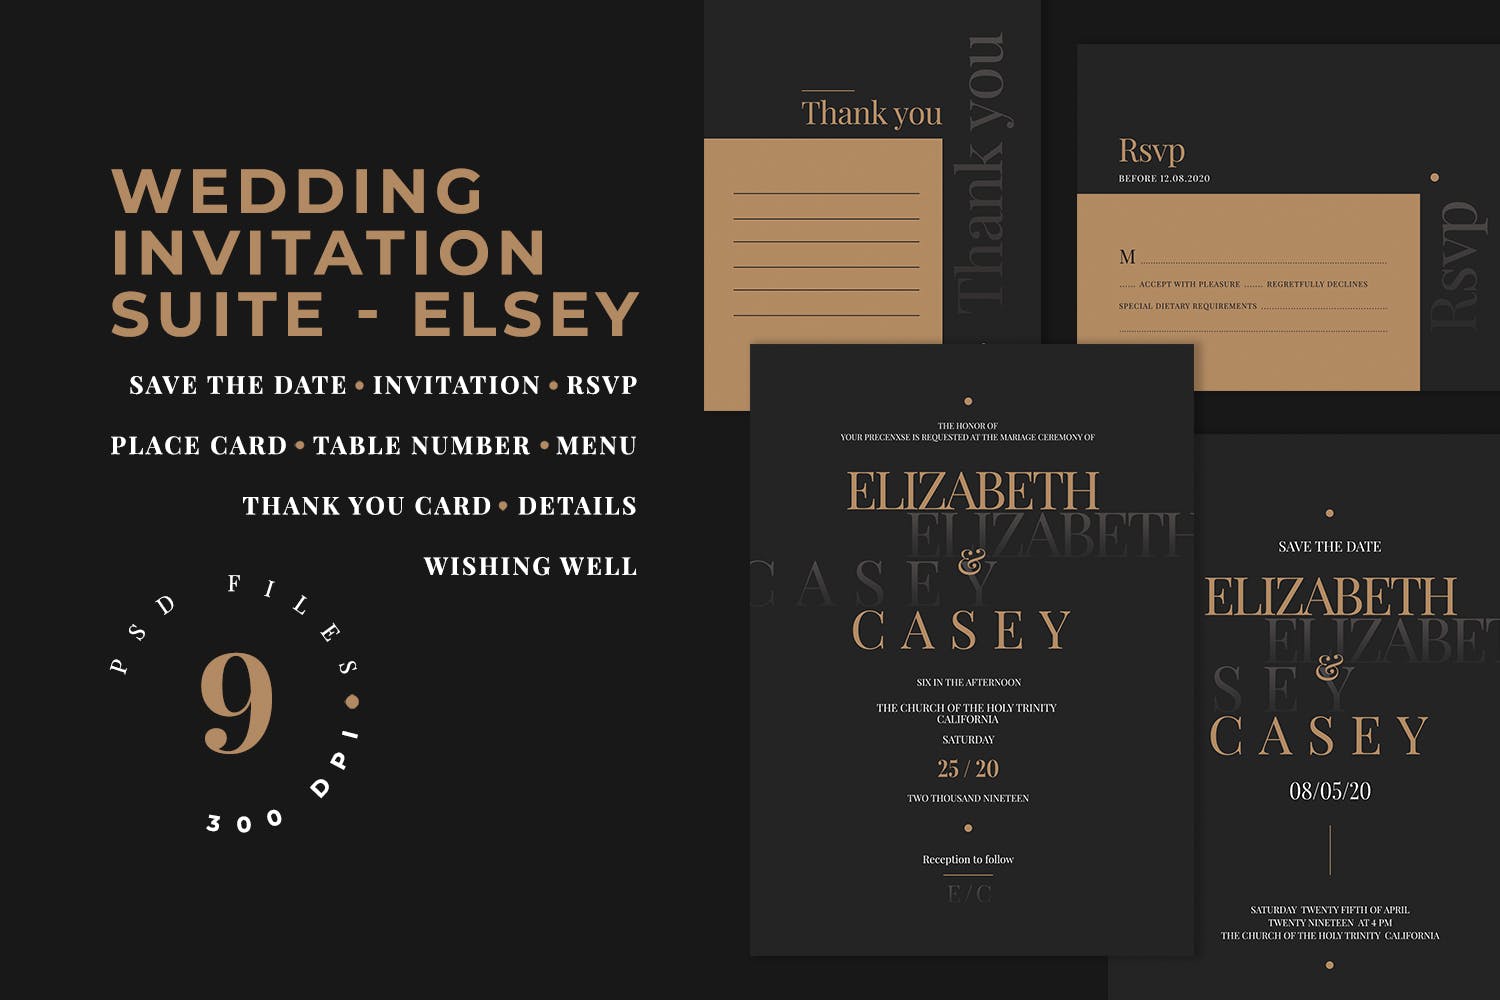 高端酷黑设计风格婚礼邀请设计套件 Wedding Invitation Suite – ELSEY插图(1)